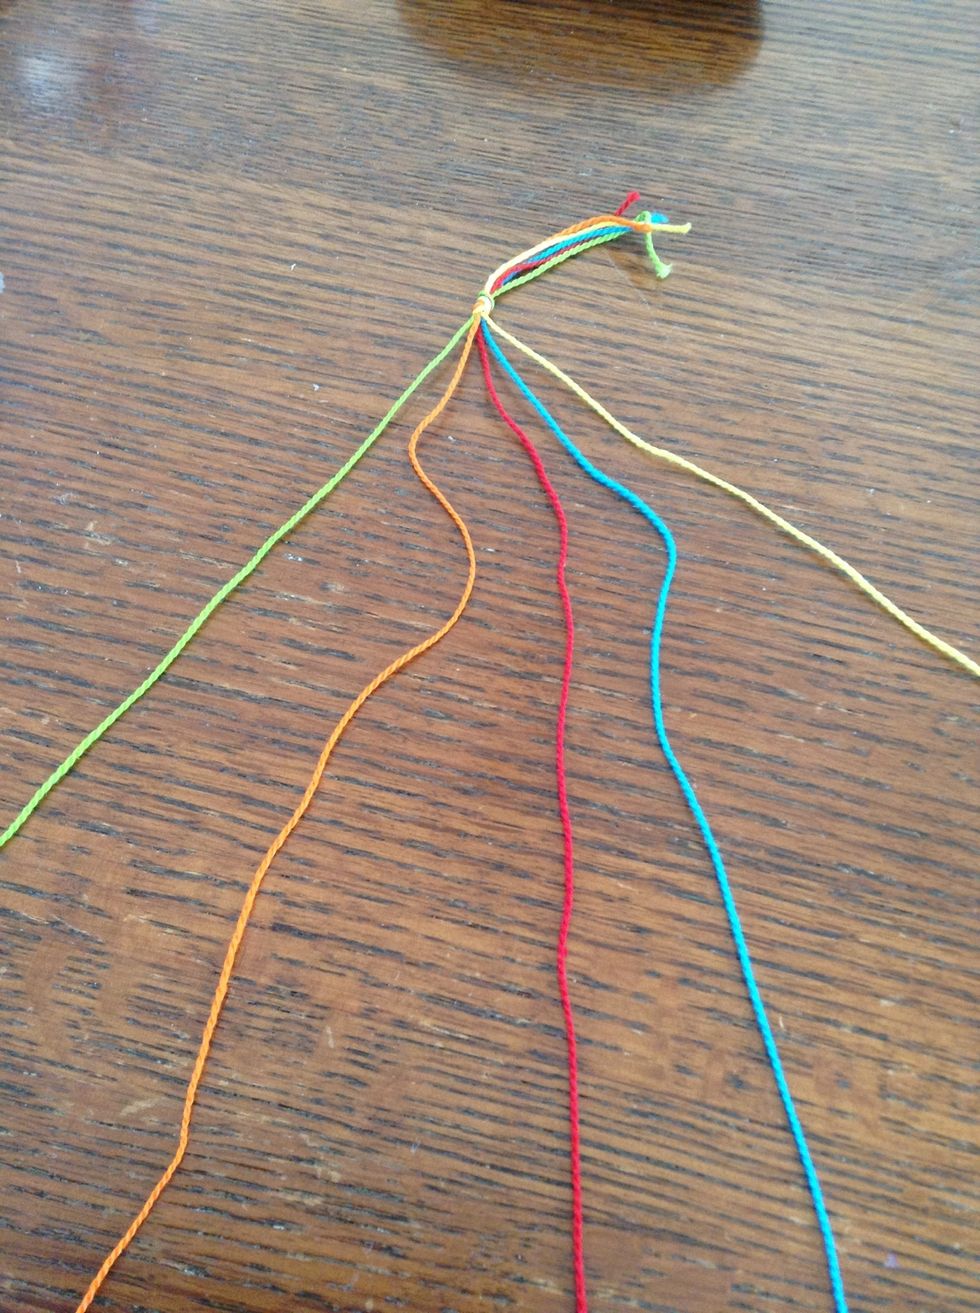 How to make a 5 string braid - B+C Guides